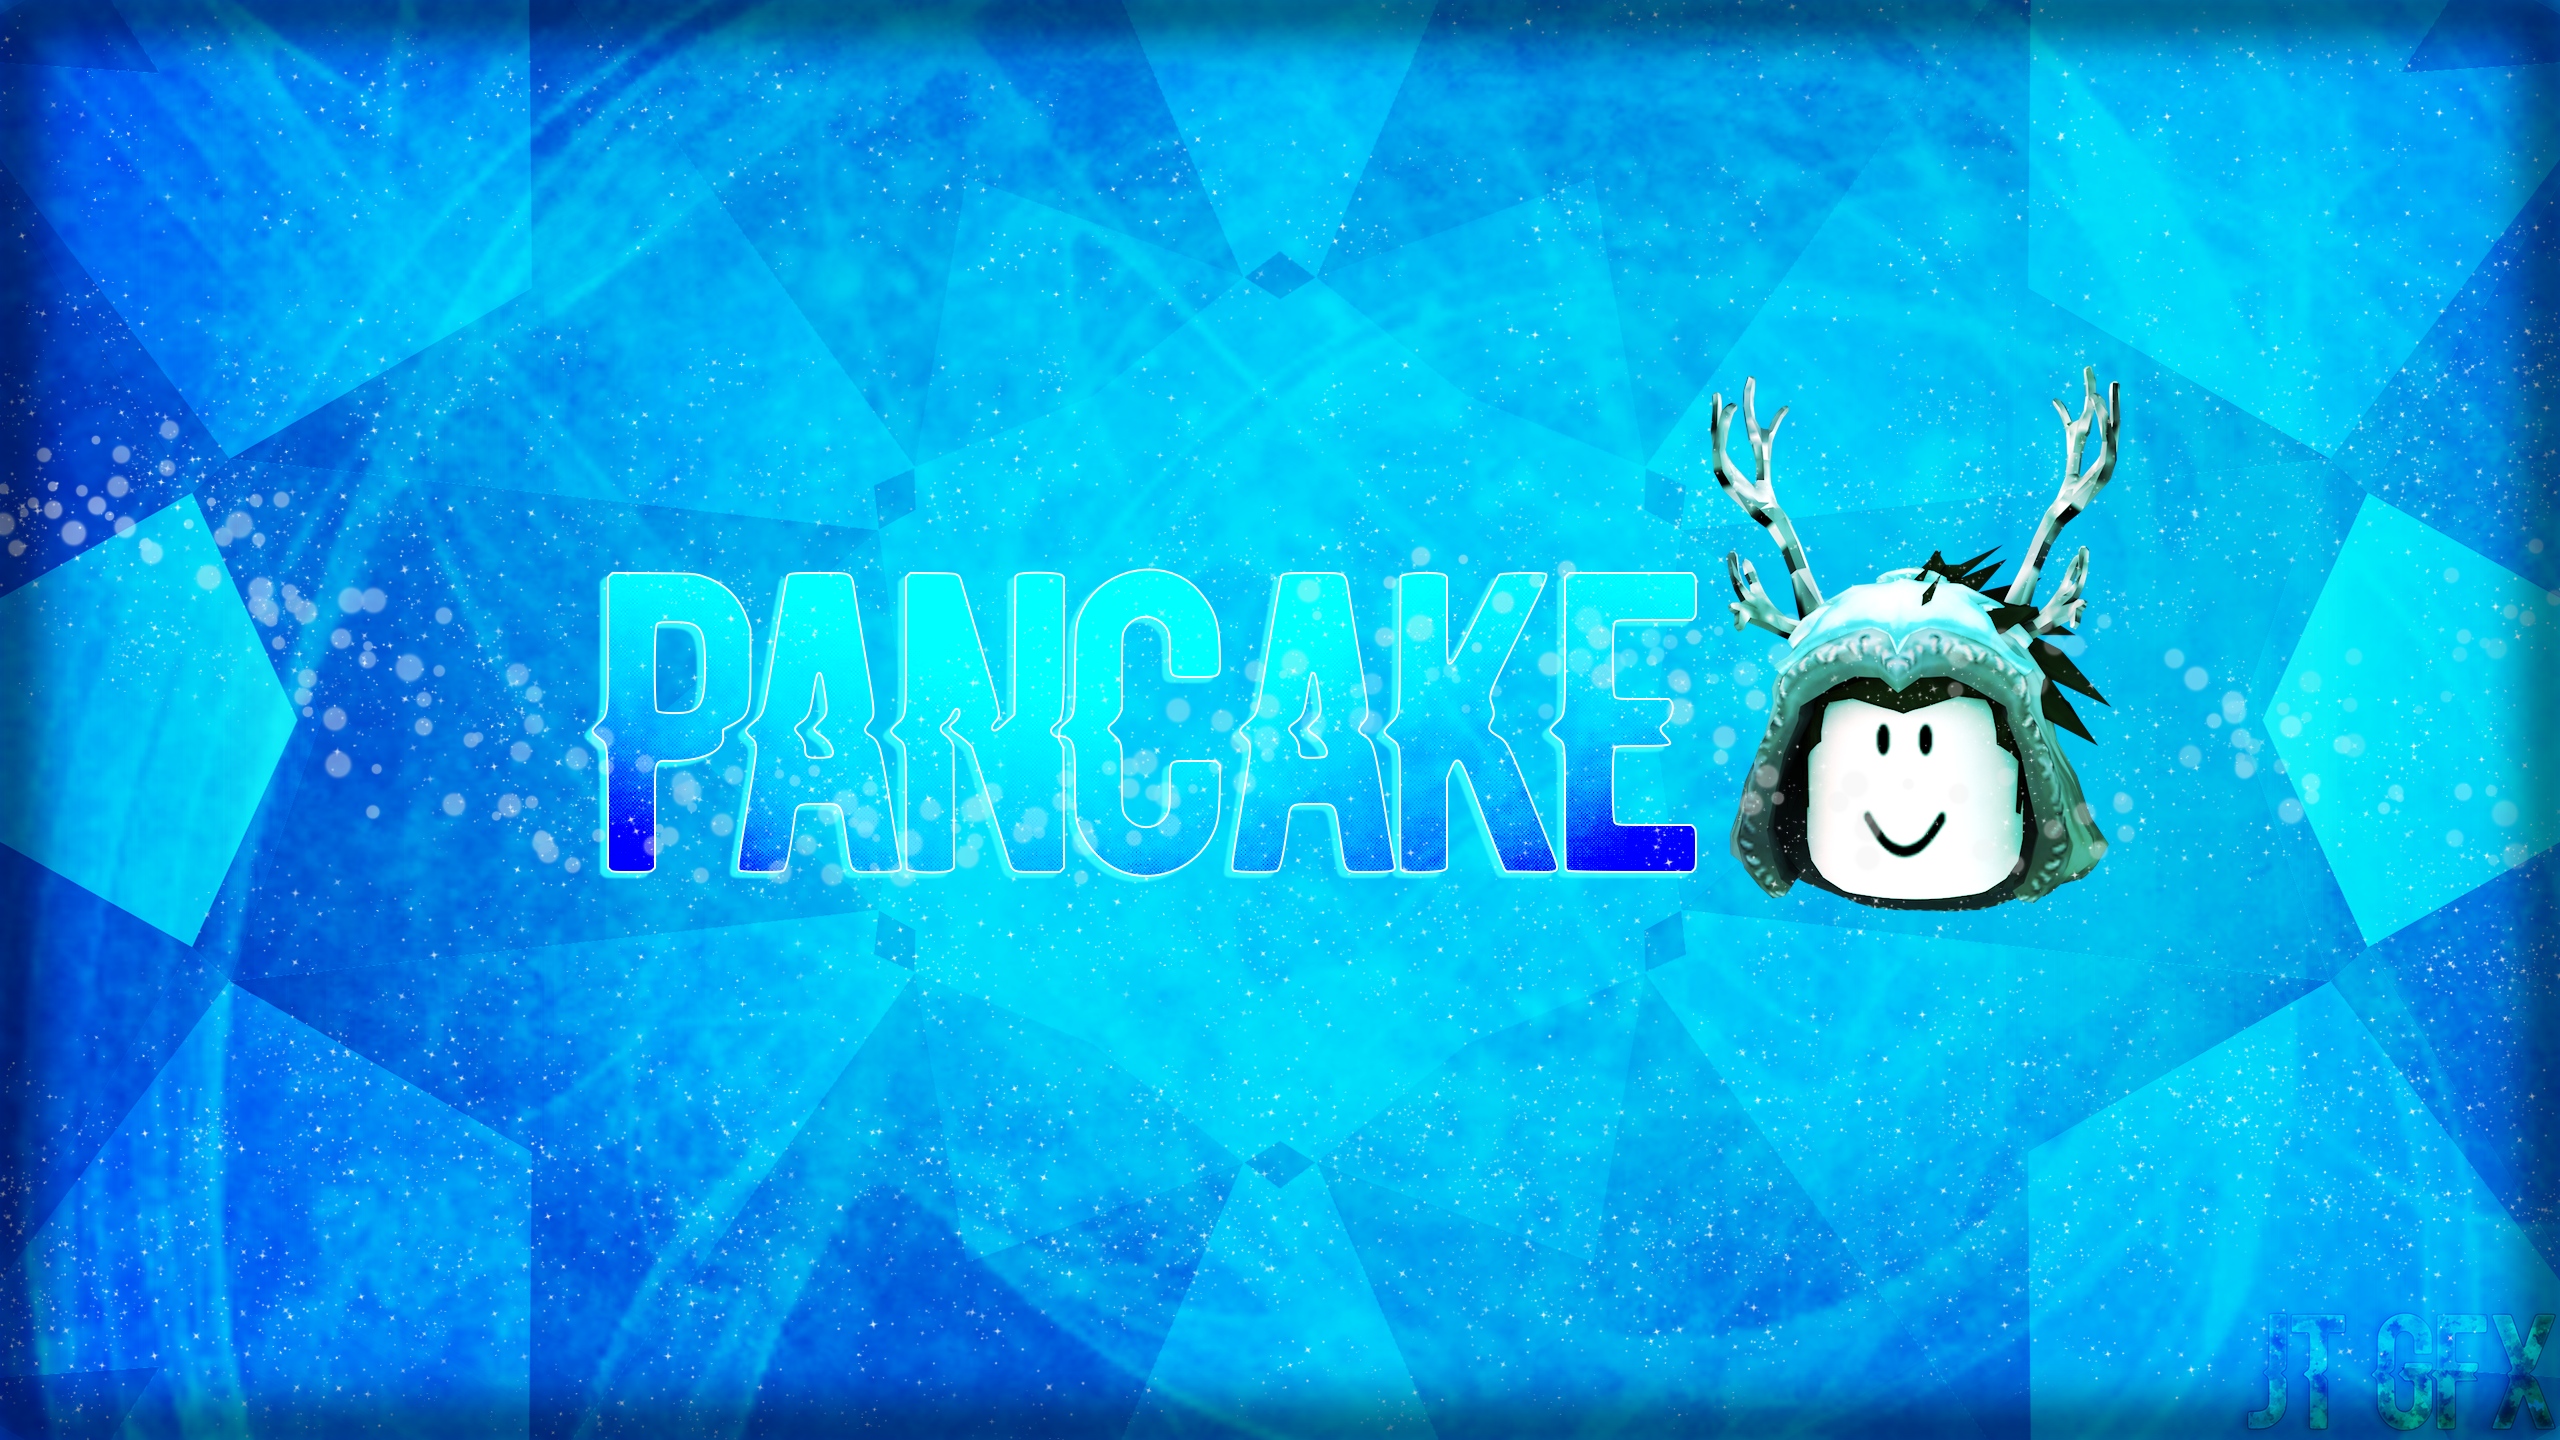 Pancakeexpired New Youtube Channel Art By Jonathantran0409gfx On Deviantart - youtube roblox channel art